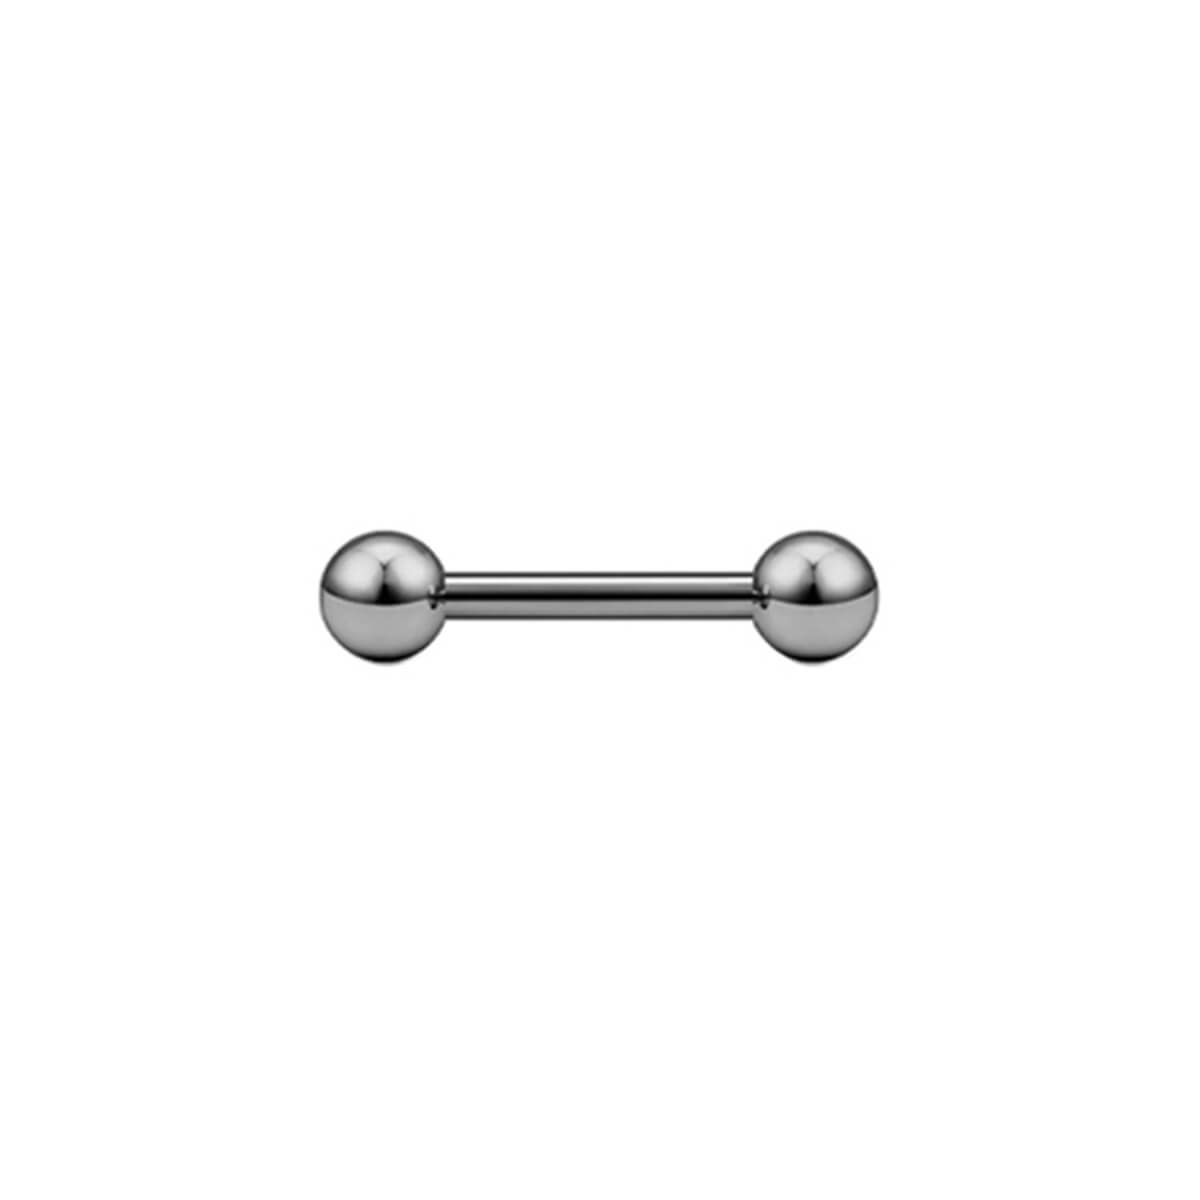 Straight pin 1.2mm barbell (Titanium G23)